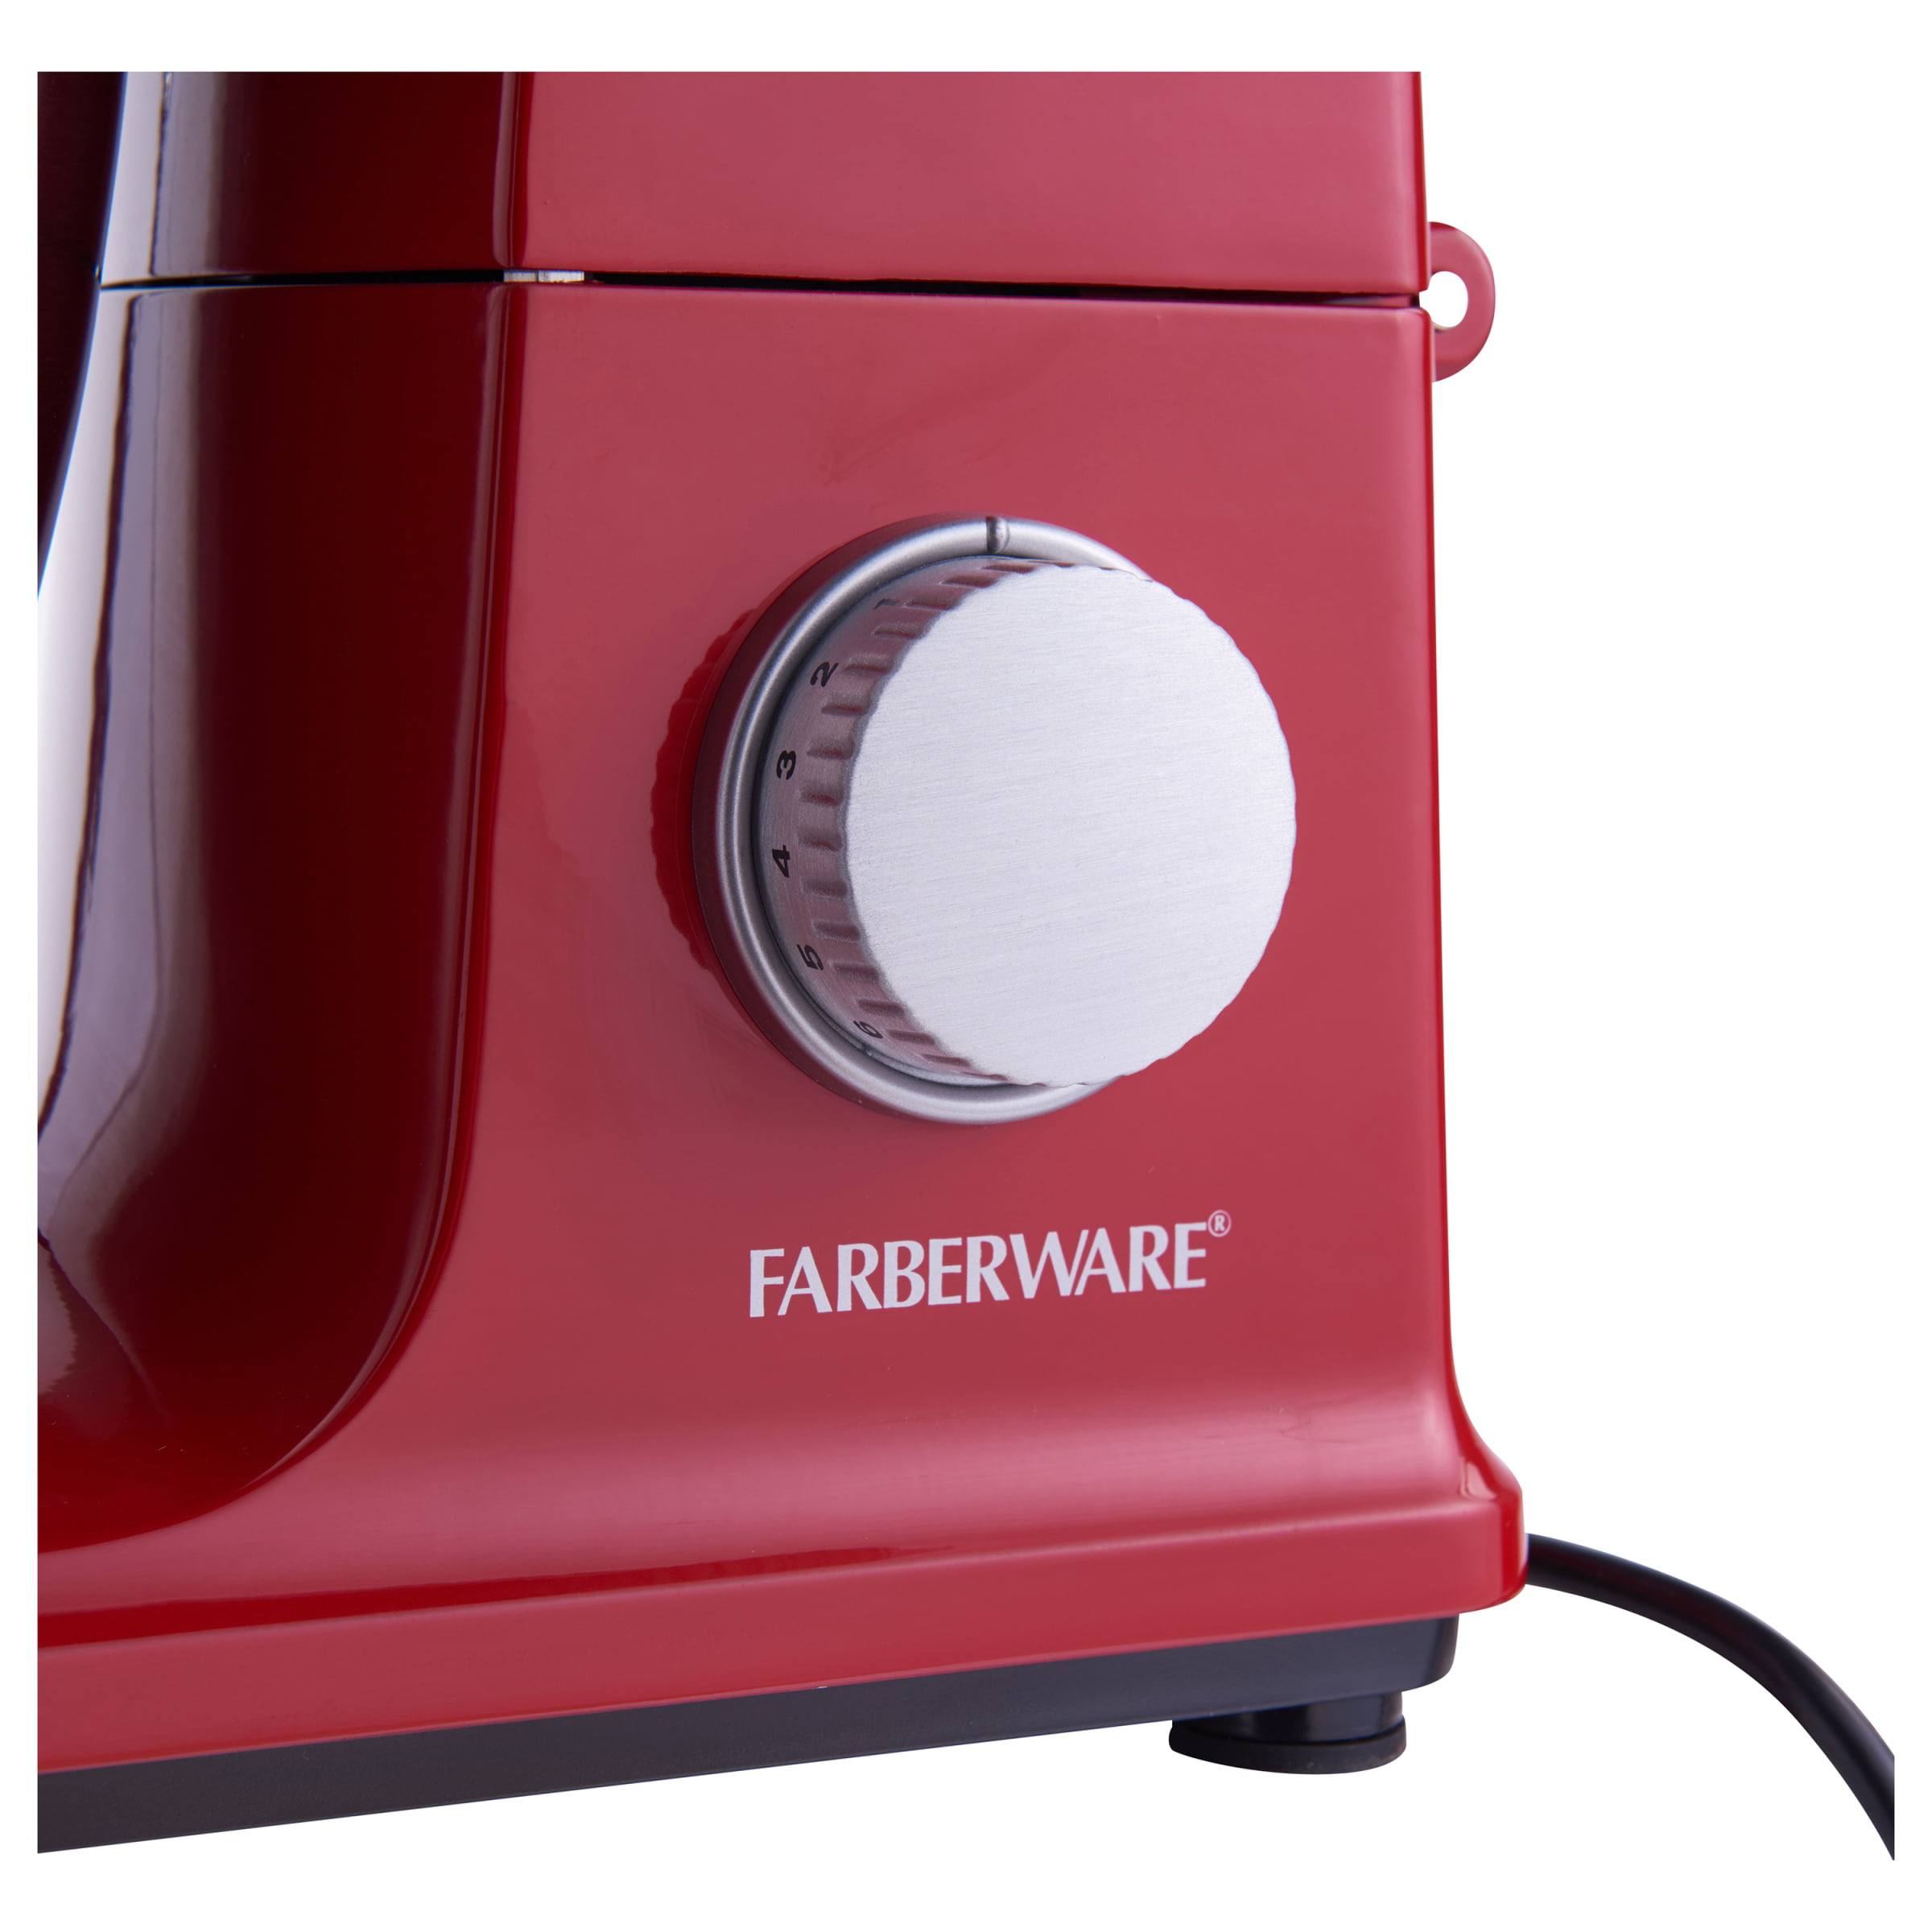 Farberware 4.7 Quart Teal Stand Mixer